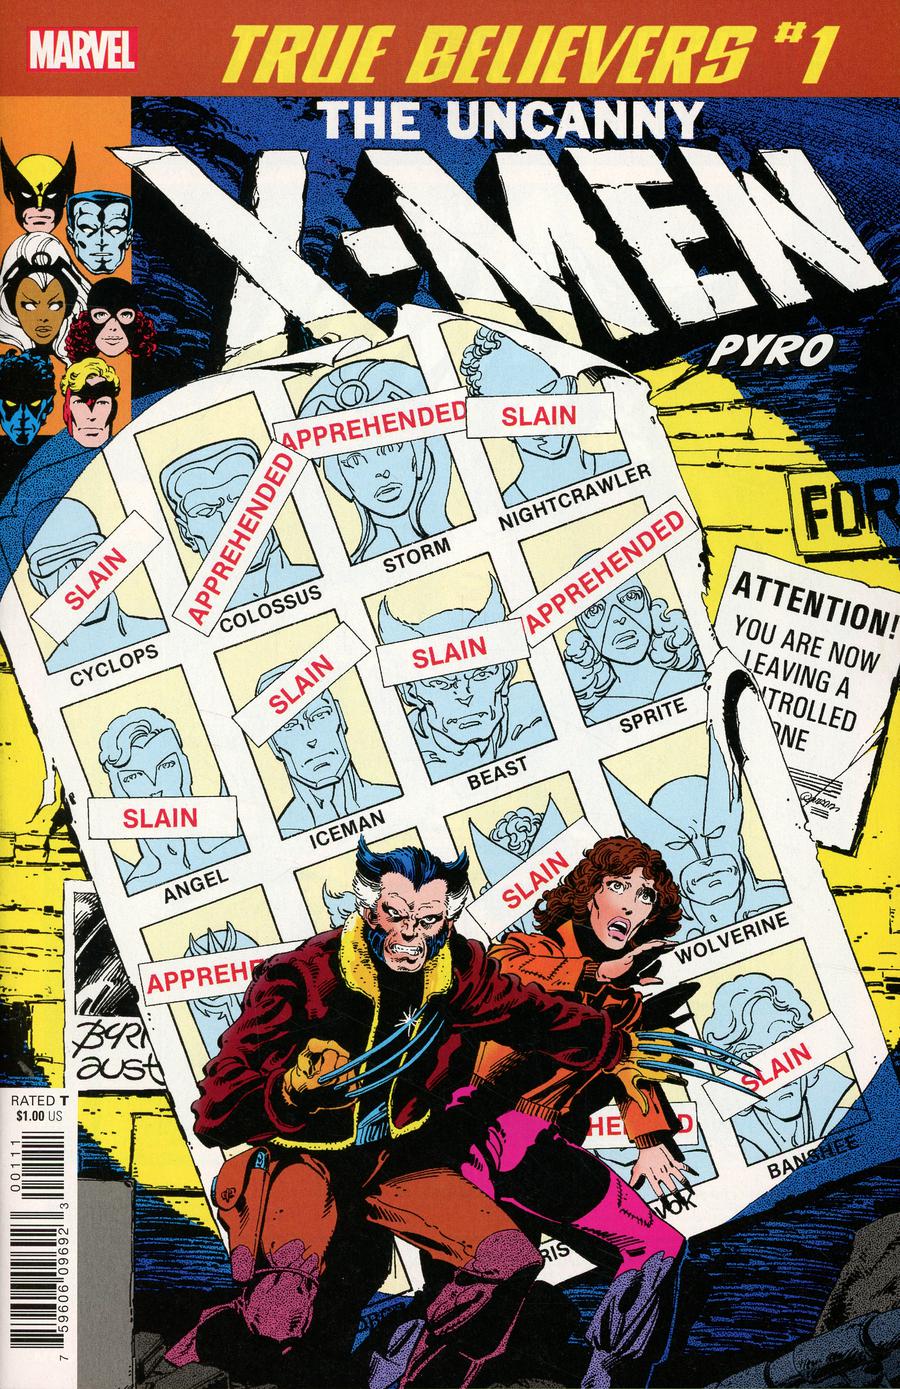 True Believers X-Men Pyro #1 Cover A Regular Cover